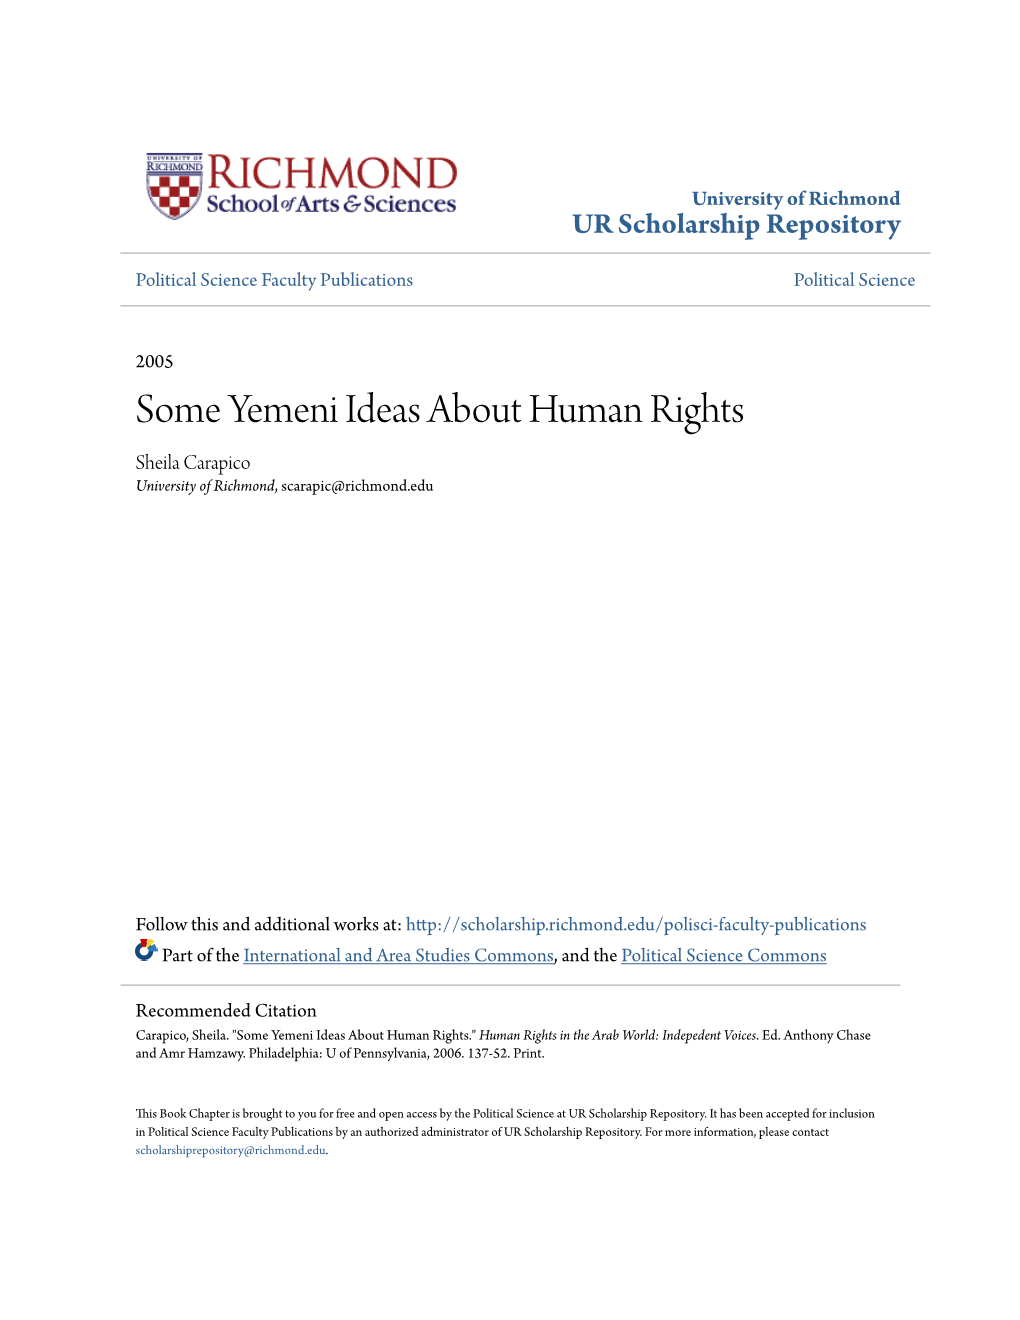 Some Yemeni Ideas About Human Rights Sheila Carapico University of Richmond, Scarapic@Richmond.Edu